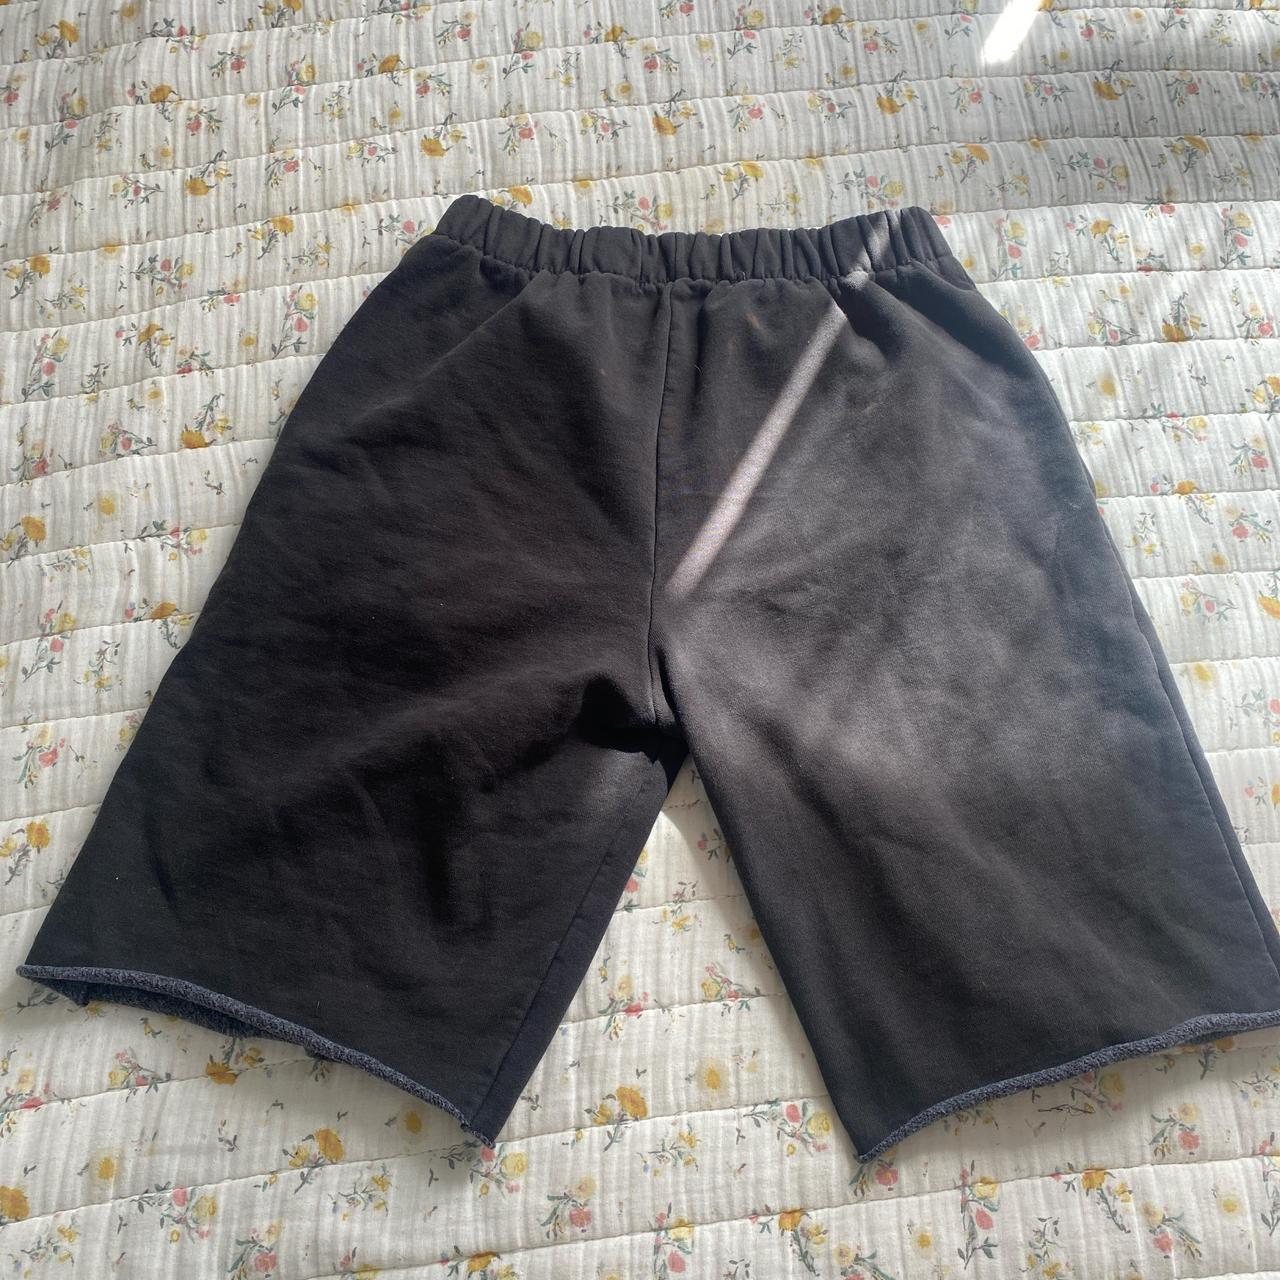 Brandy Melville Grey sweat shorts #brandymelville - Depop